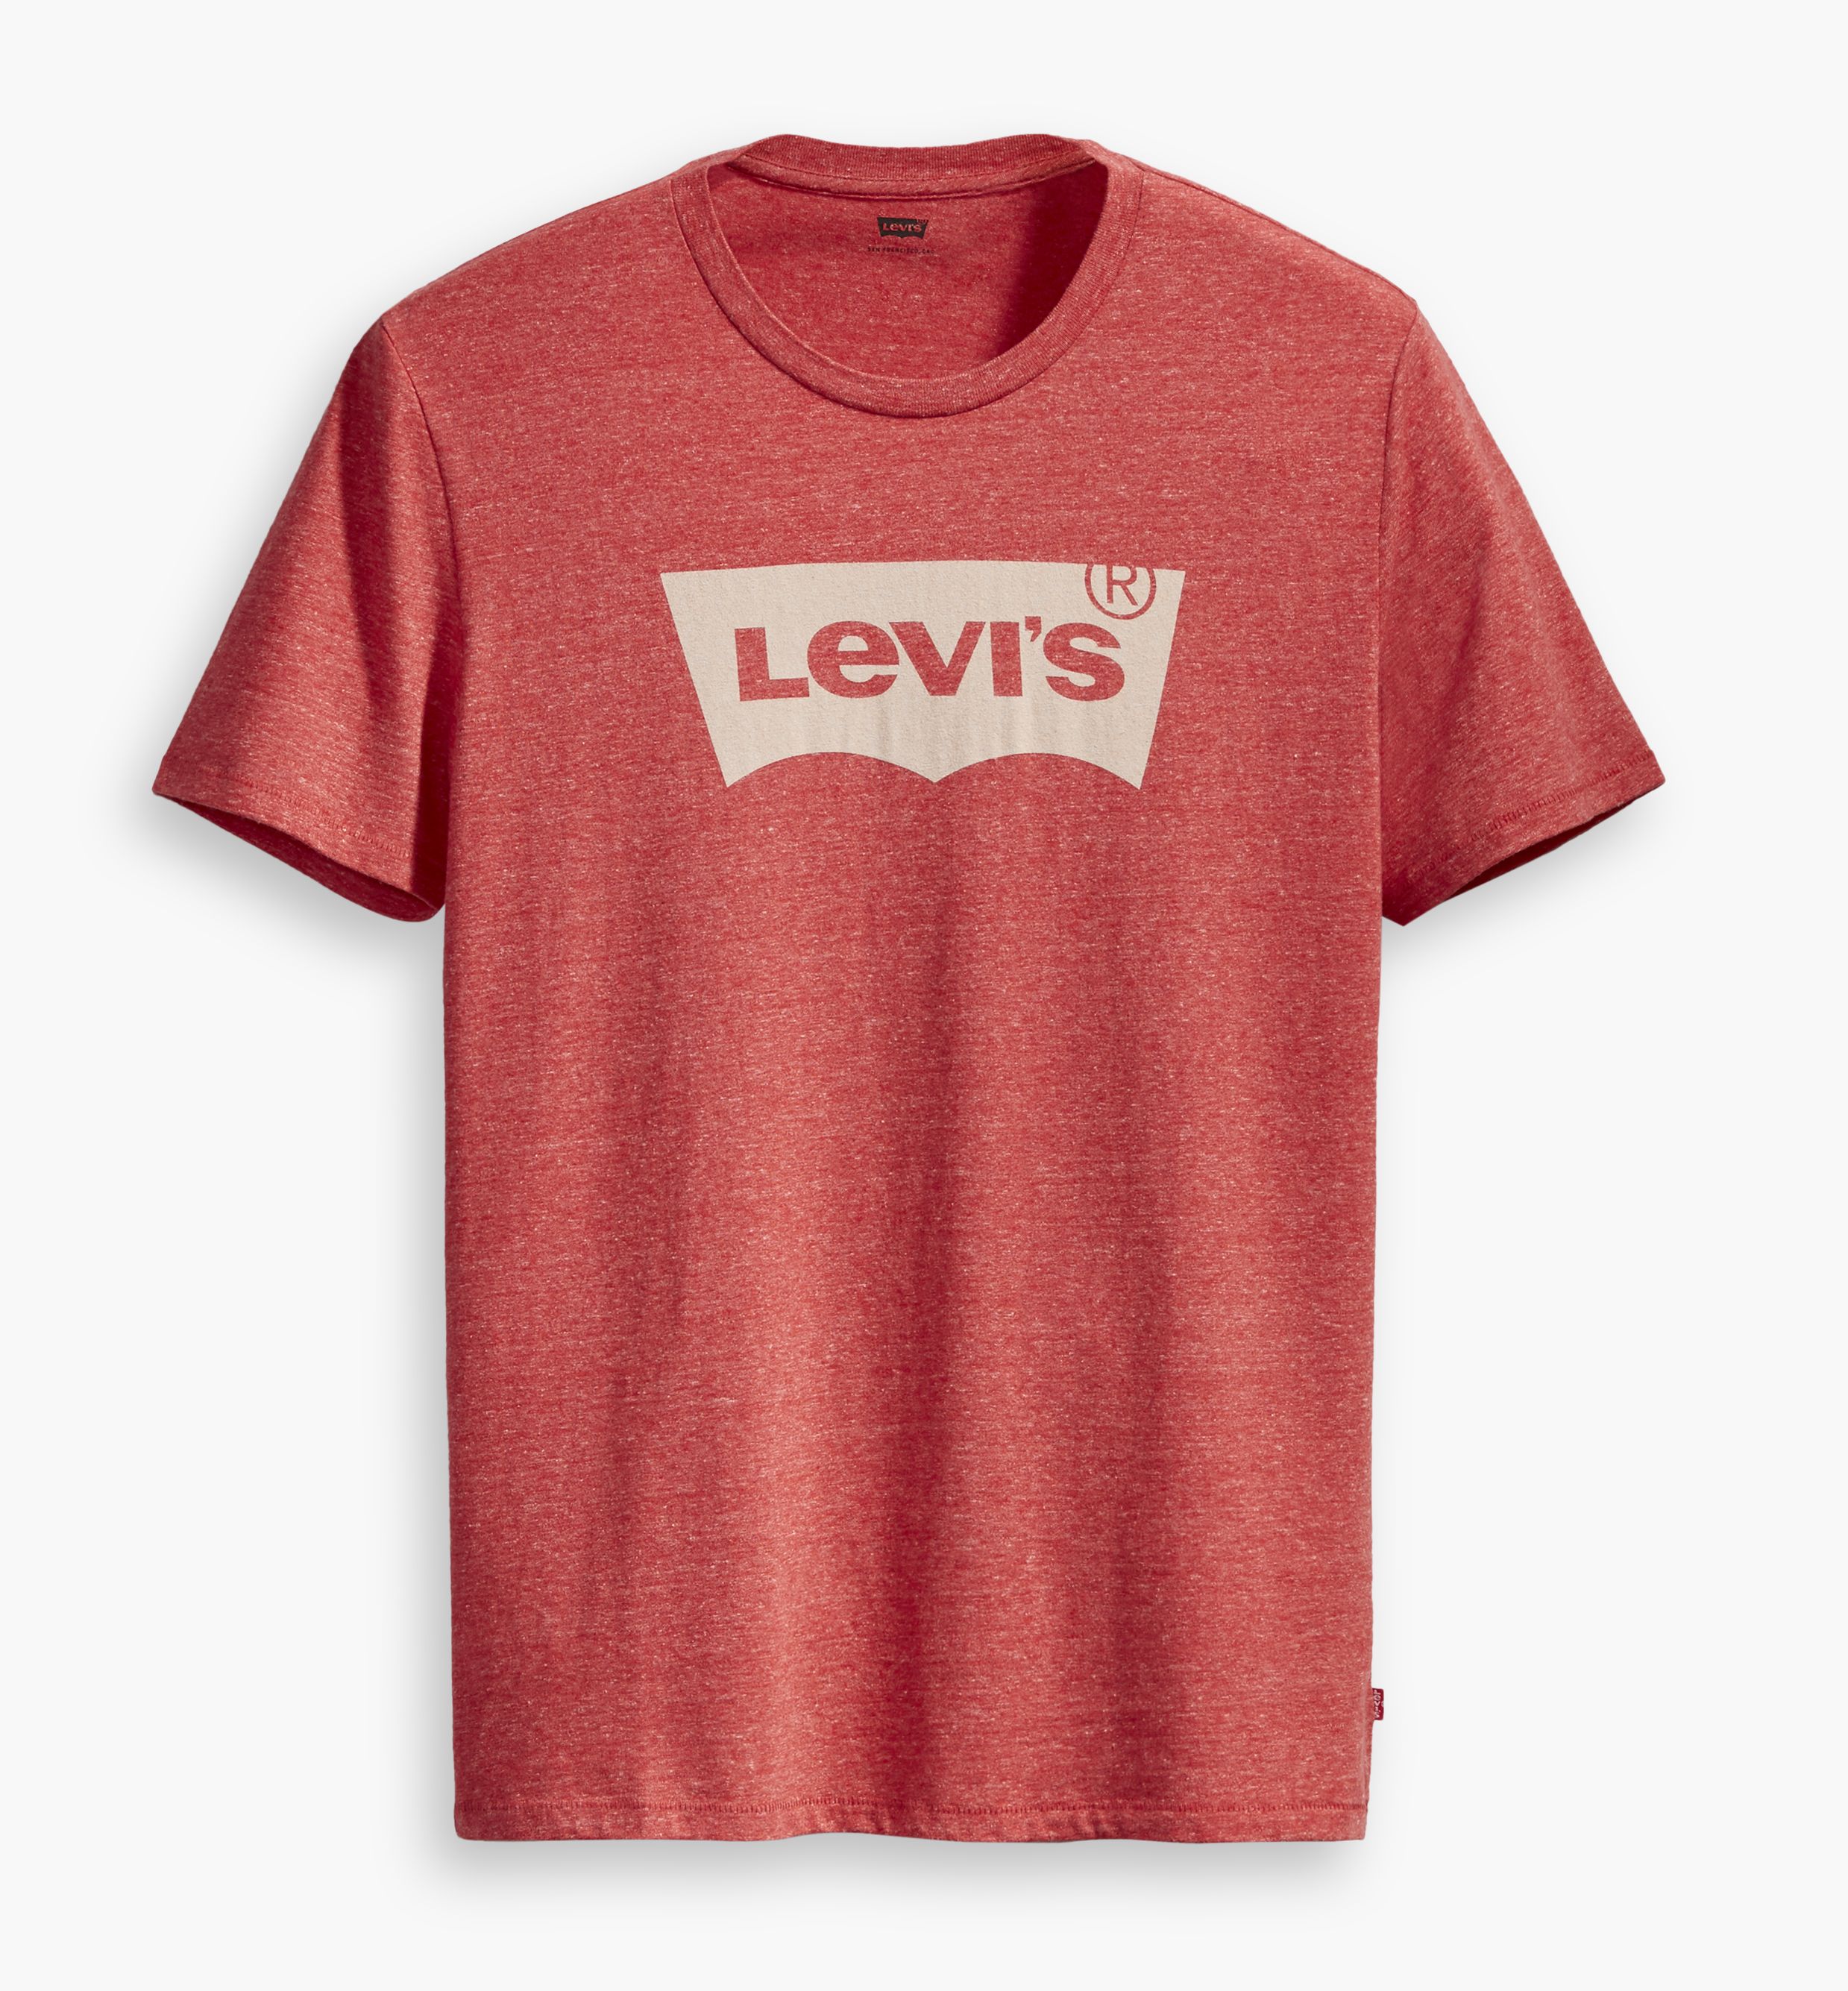 LEVIS Shirts Rundhals T-Shirt 22489-0060 rot W18-LVT1